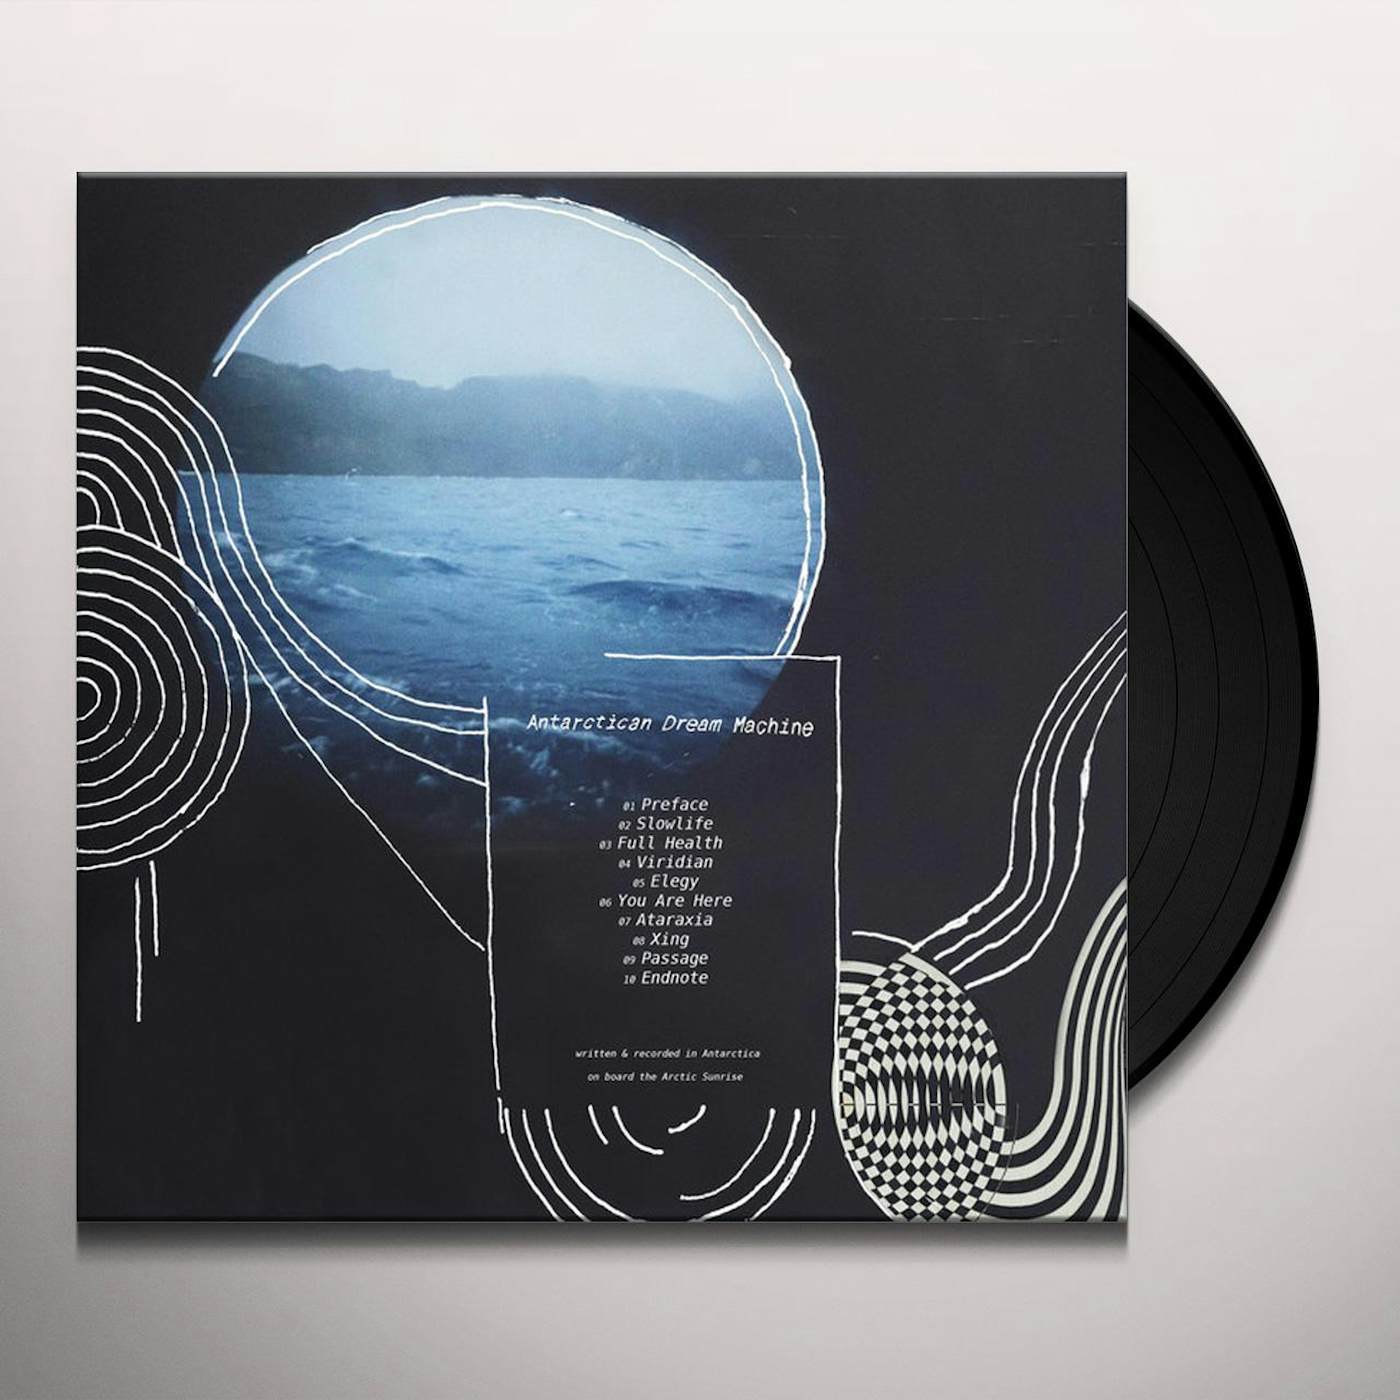 Novo Amor Antarctican Dream Machine Vinyl Record